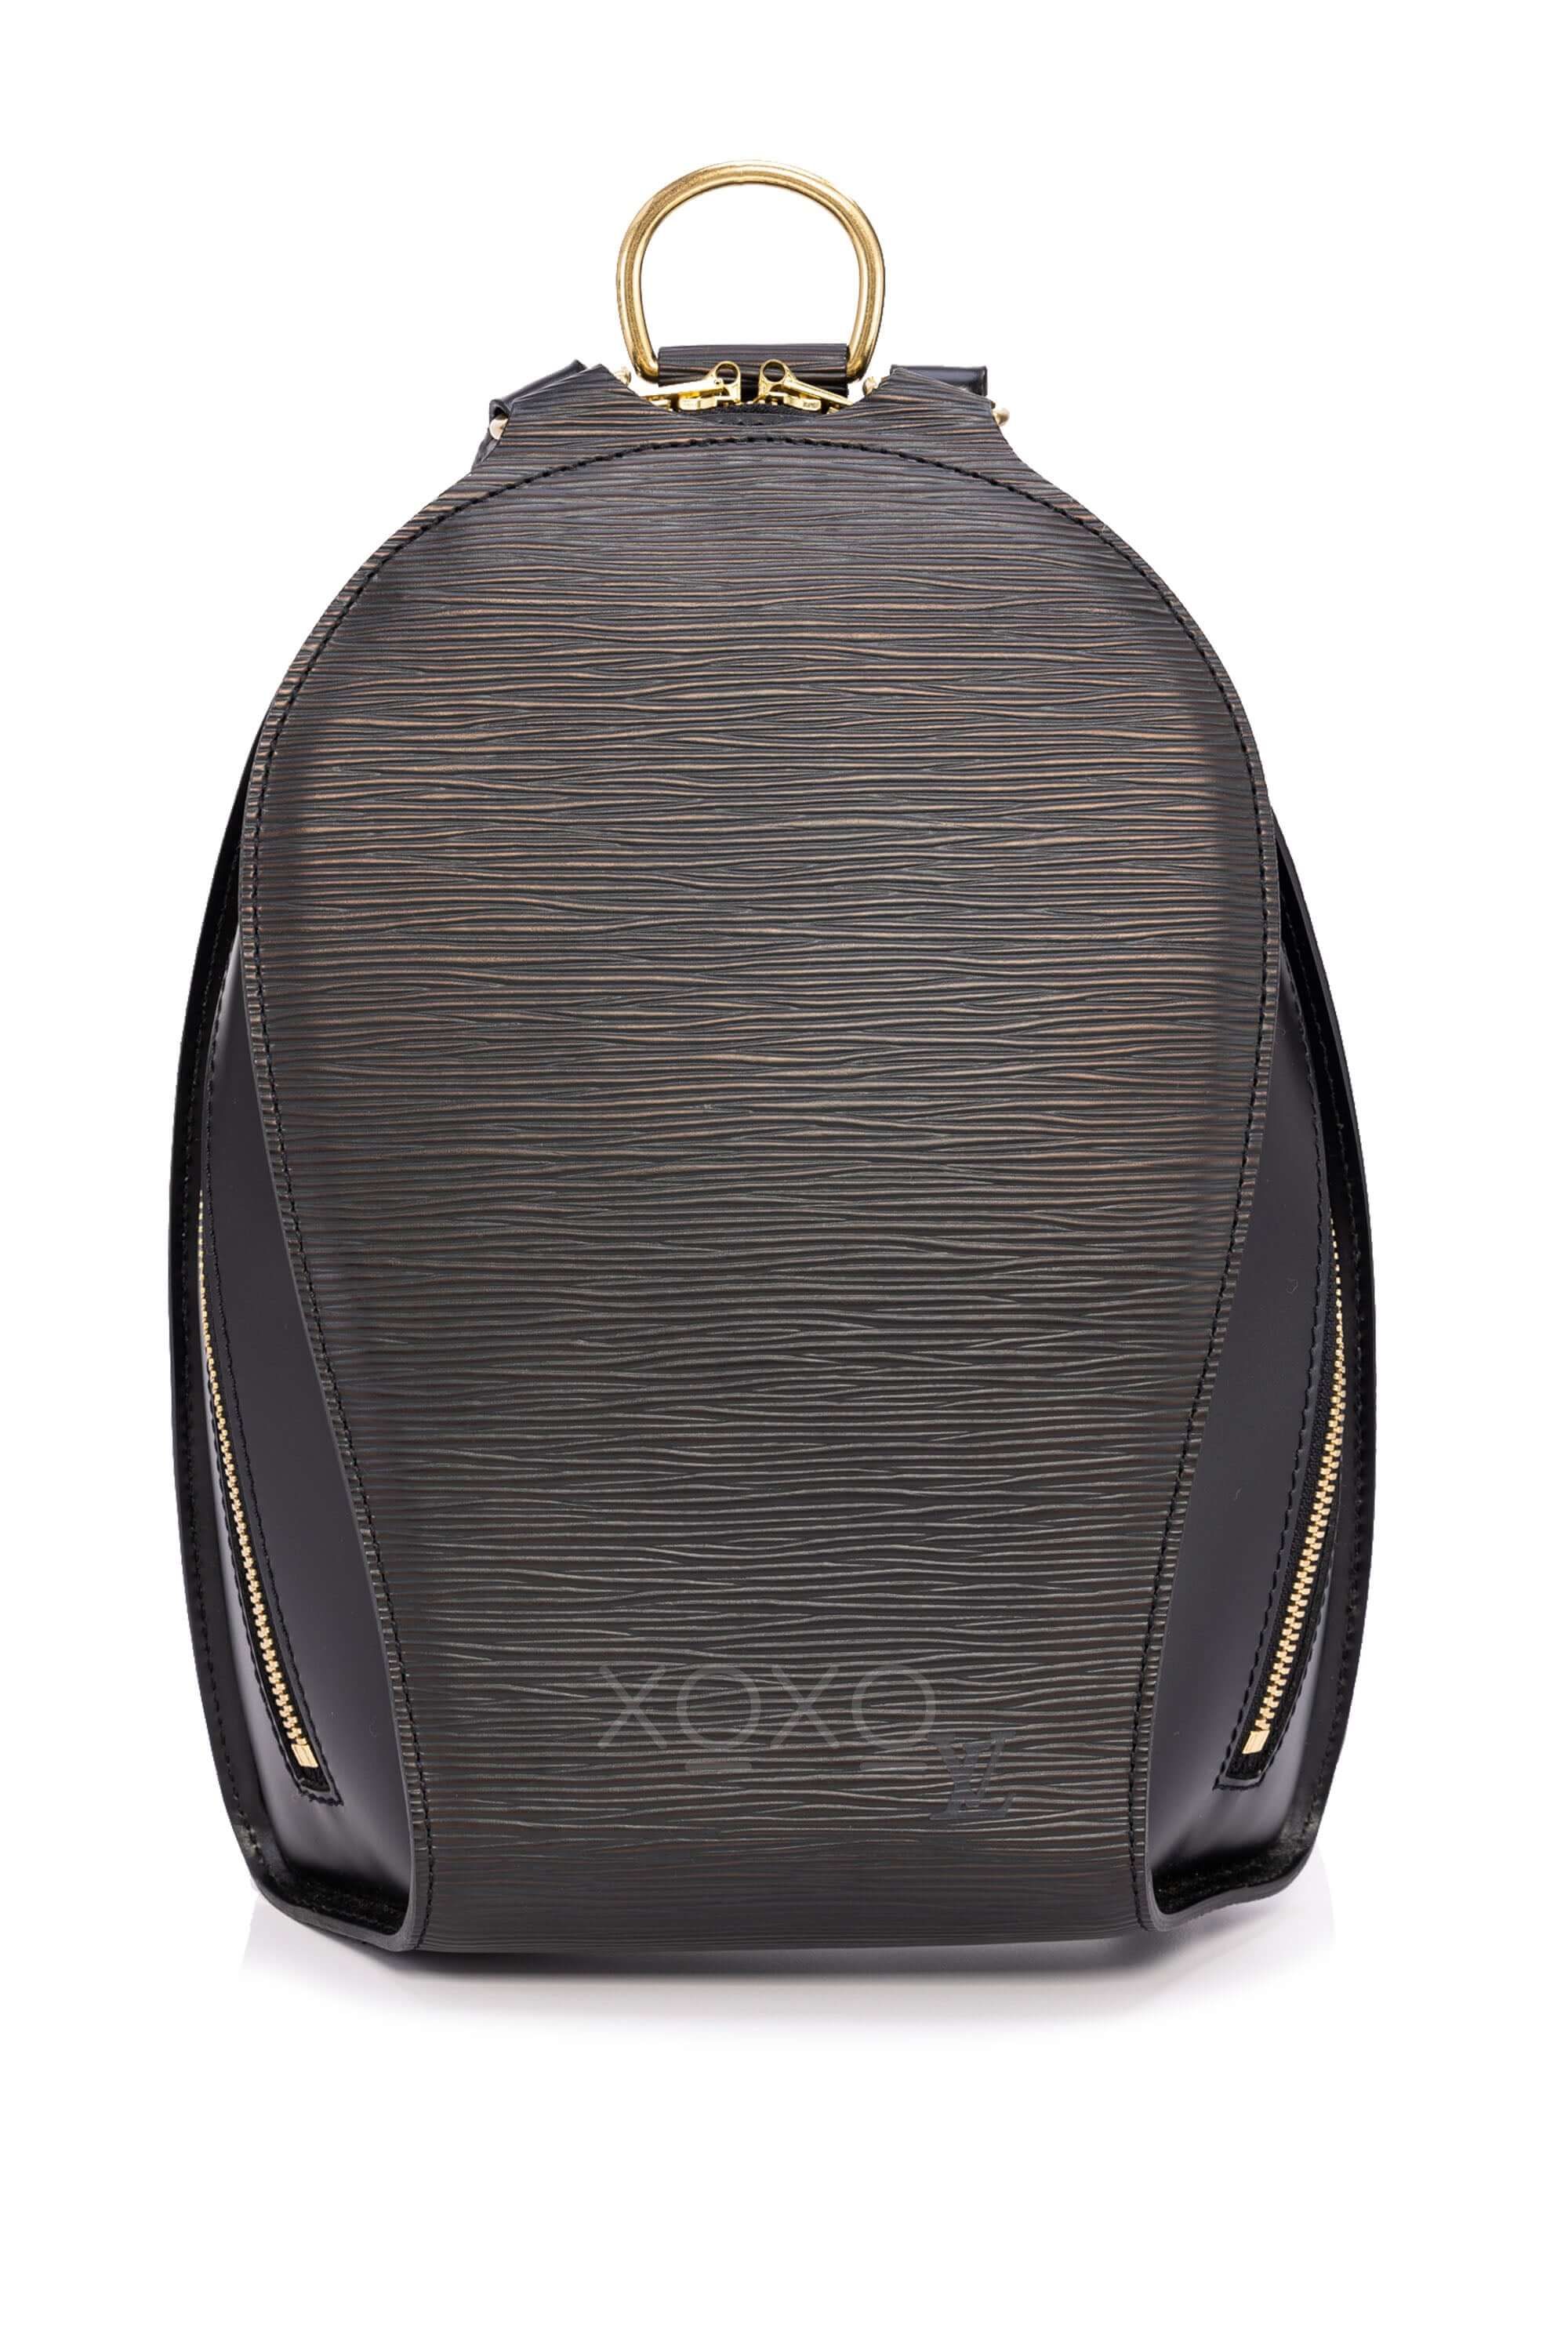 Authentic Louis Vuitton Rare Black Epi Leather Mabillon Backpack